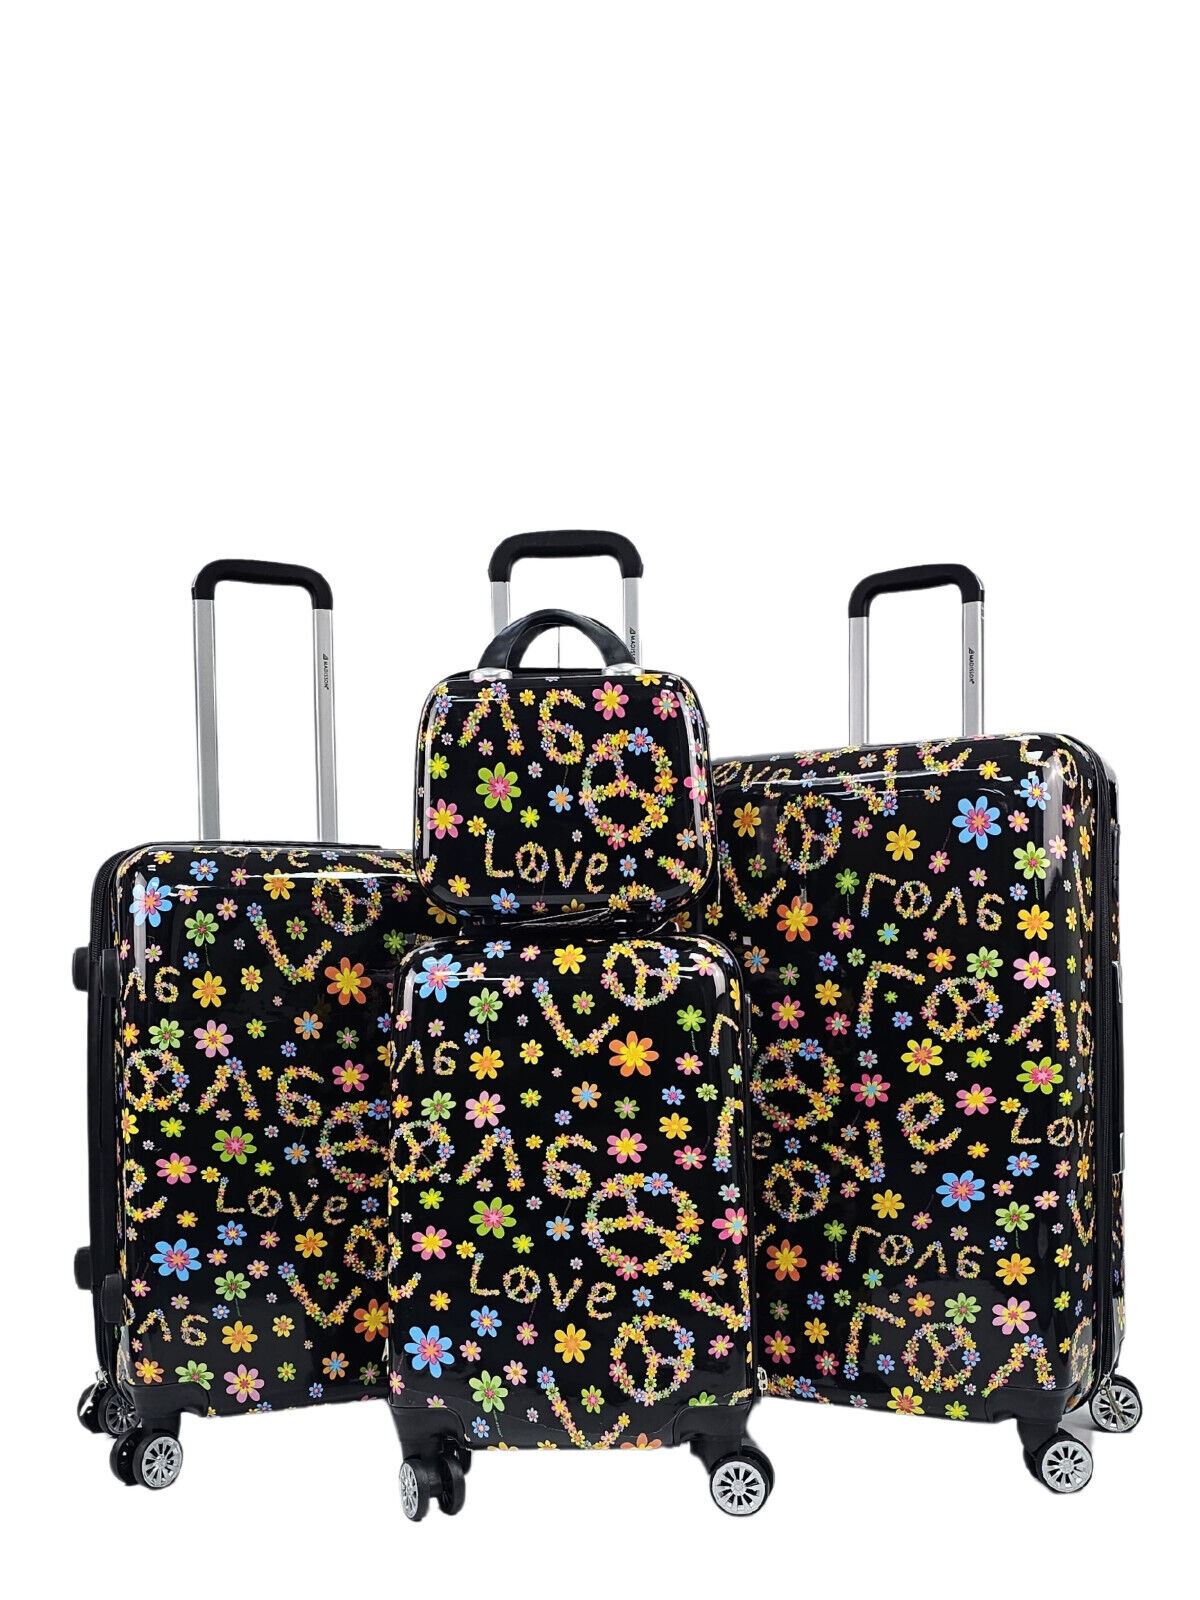 Hard Shell Printed Dual 4 Wheel Luggage Suitcase